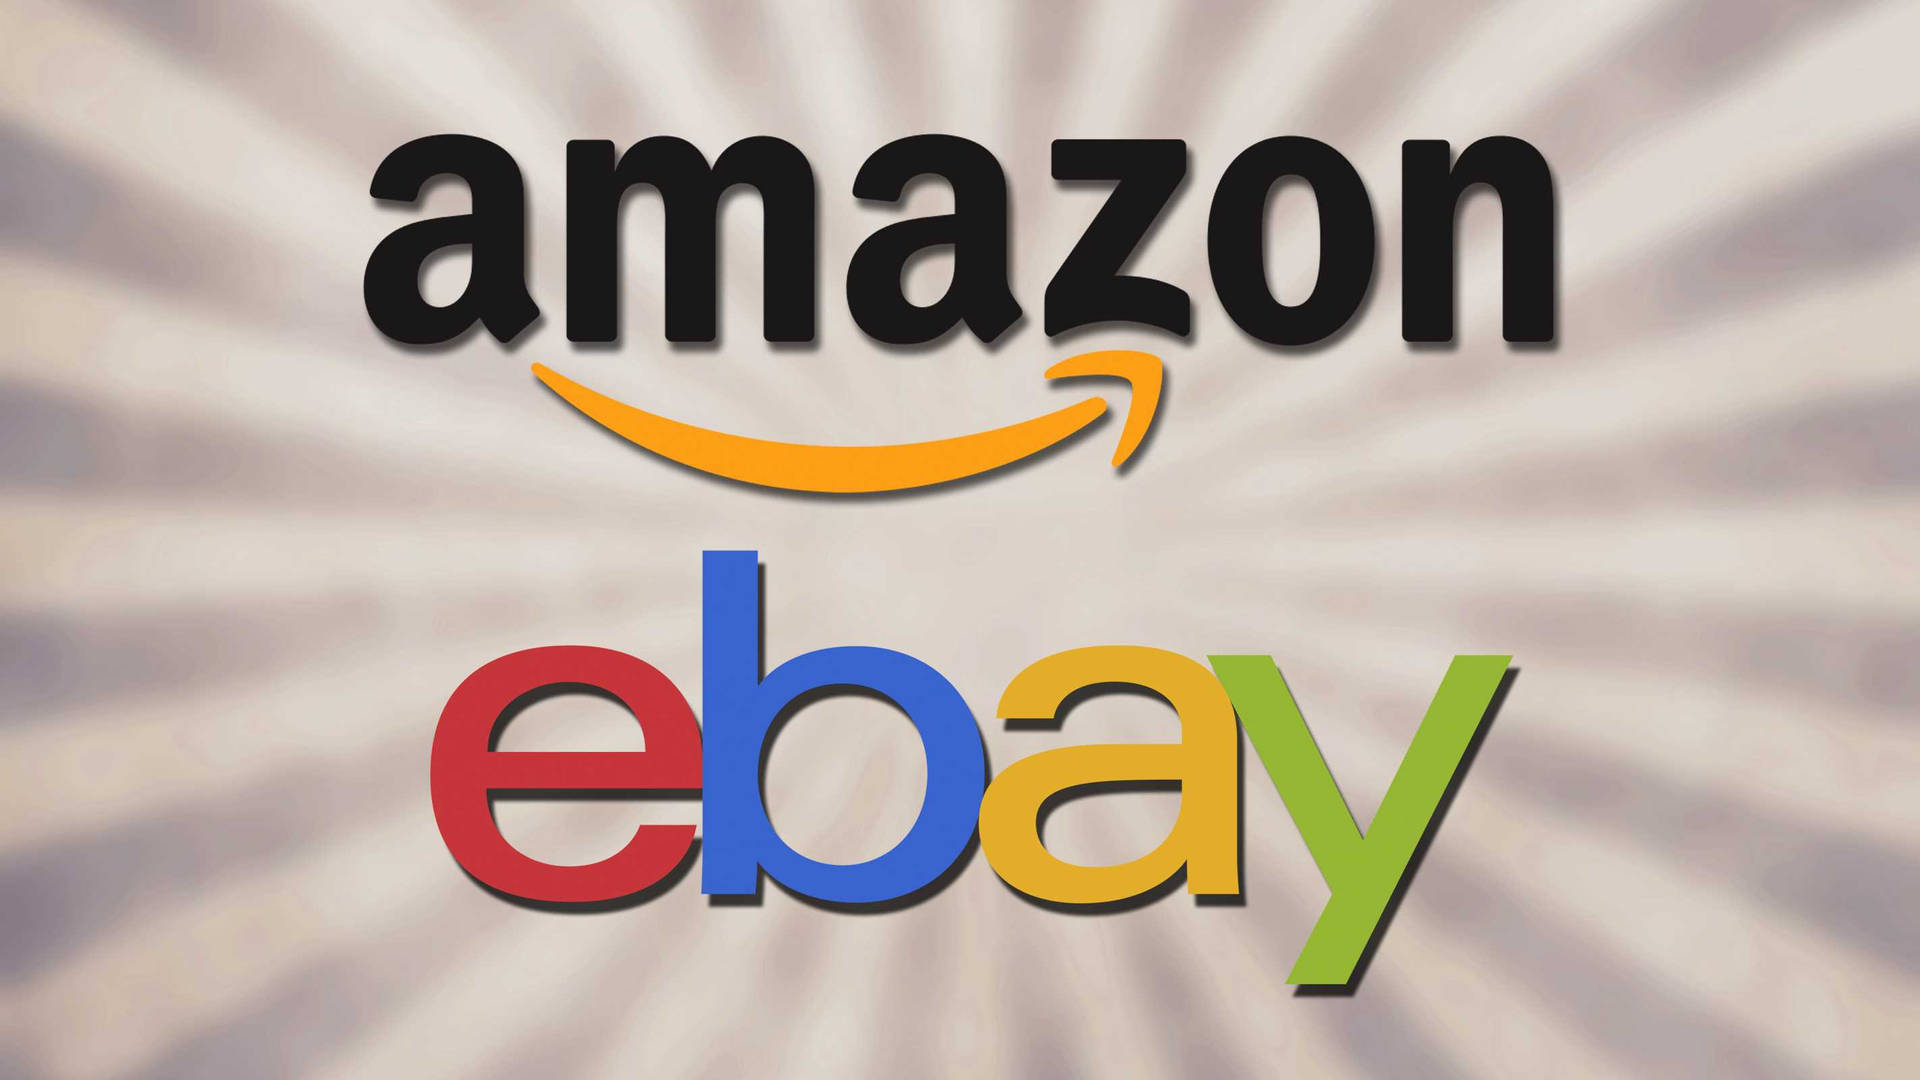 Amazon And Ebay Logos Wallpaper